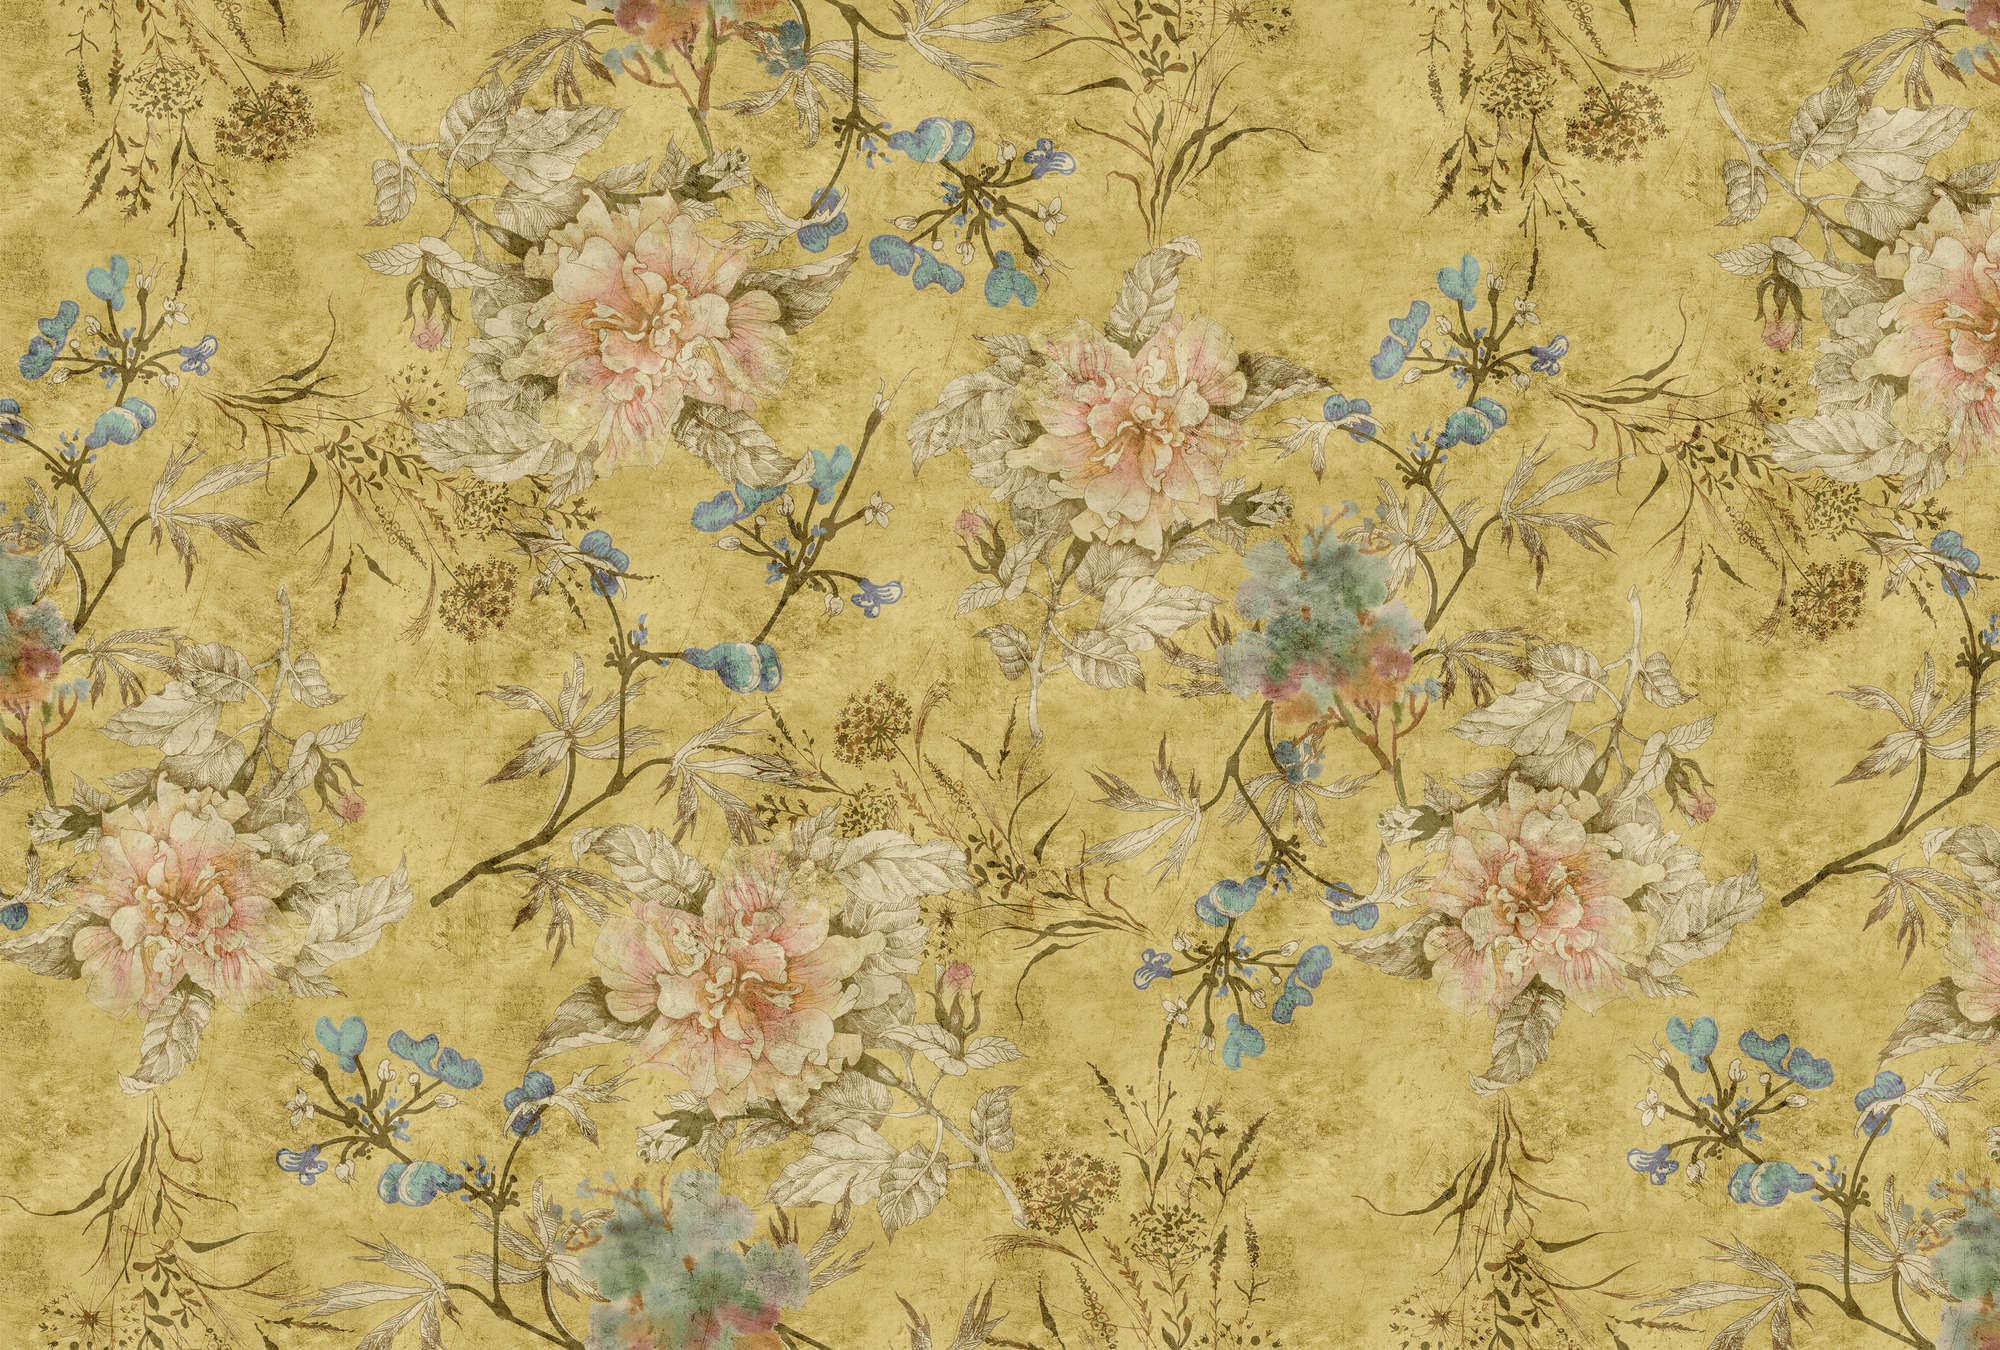             Tenderblossom 2 - Papel Pintado Floral Vintage - Textura Raspada - Amarillo | Liso Mate
        